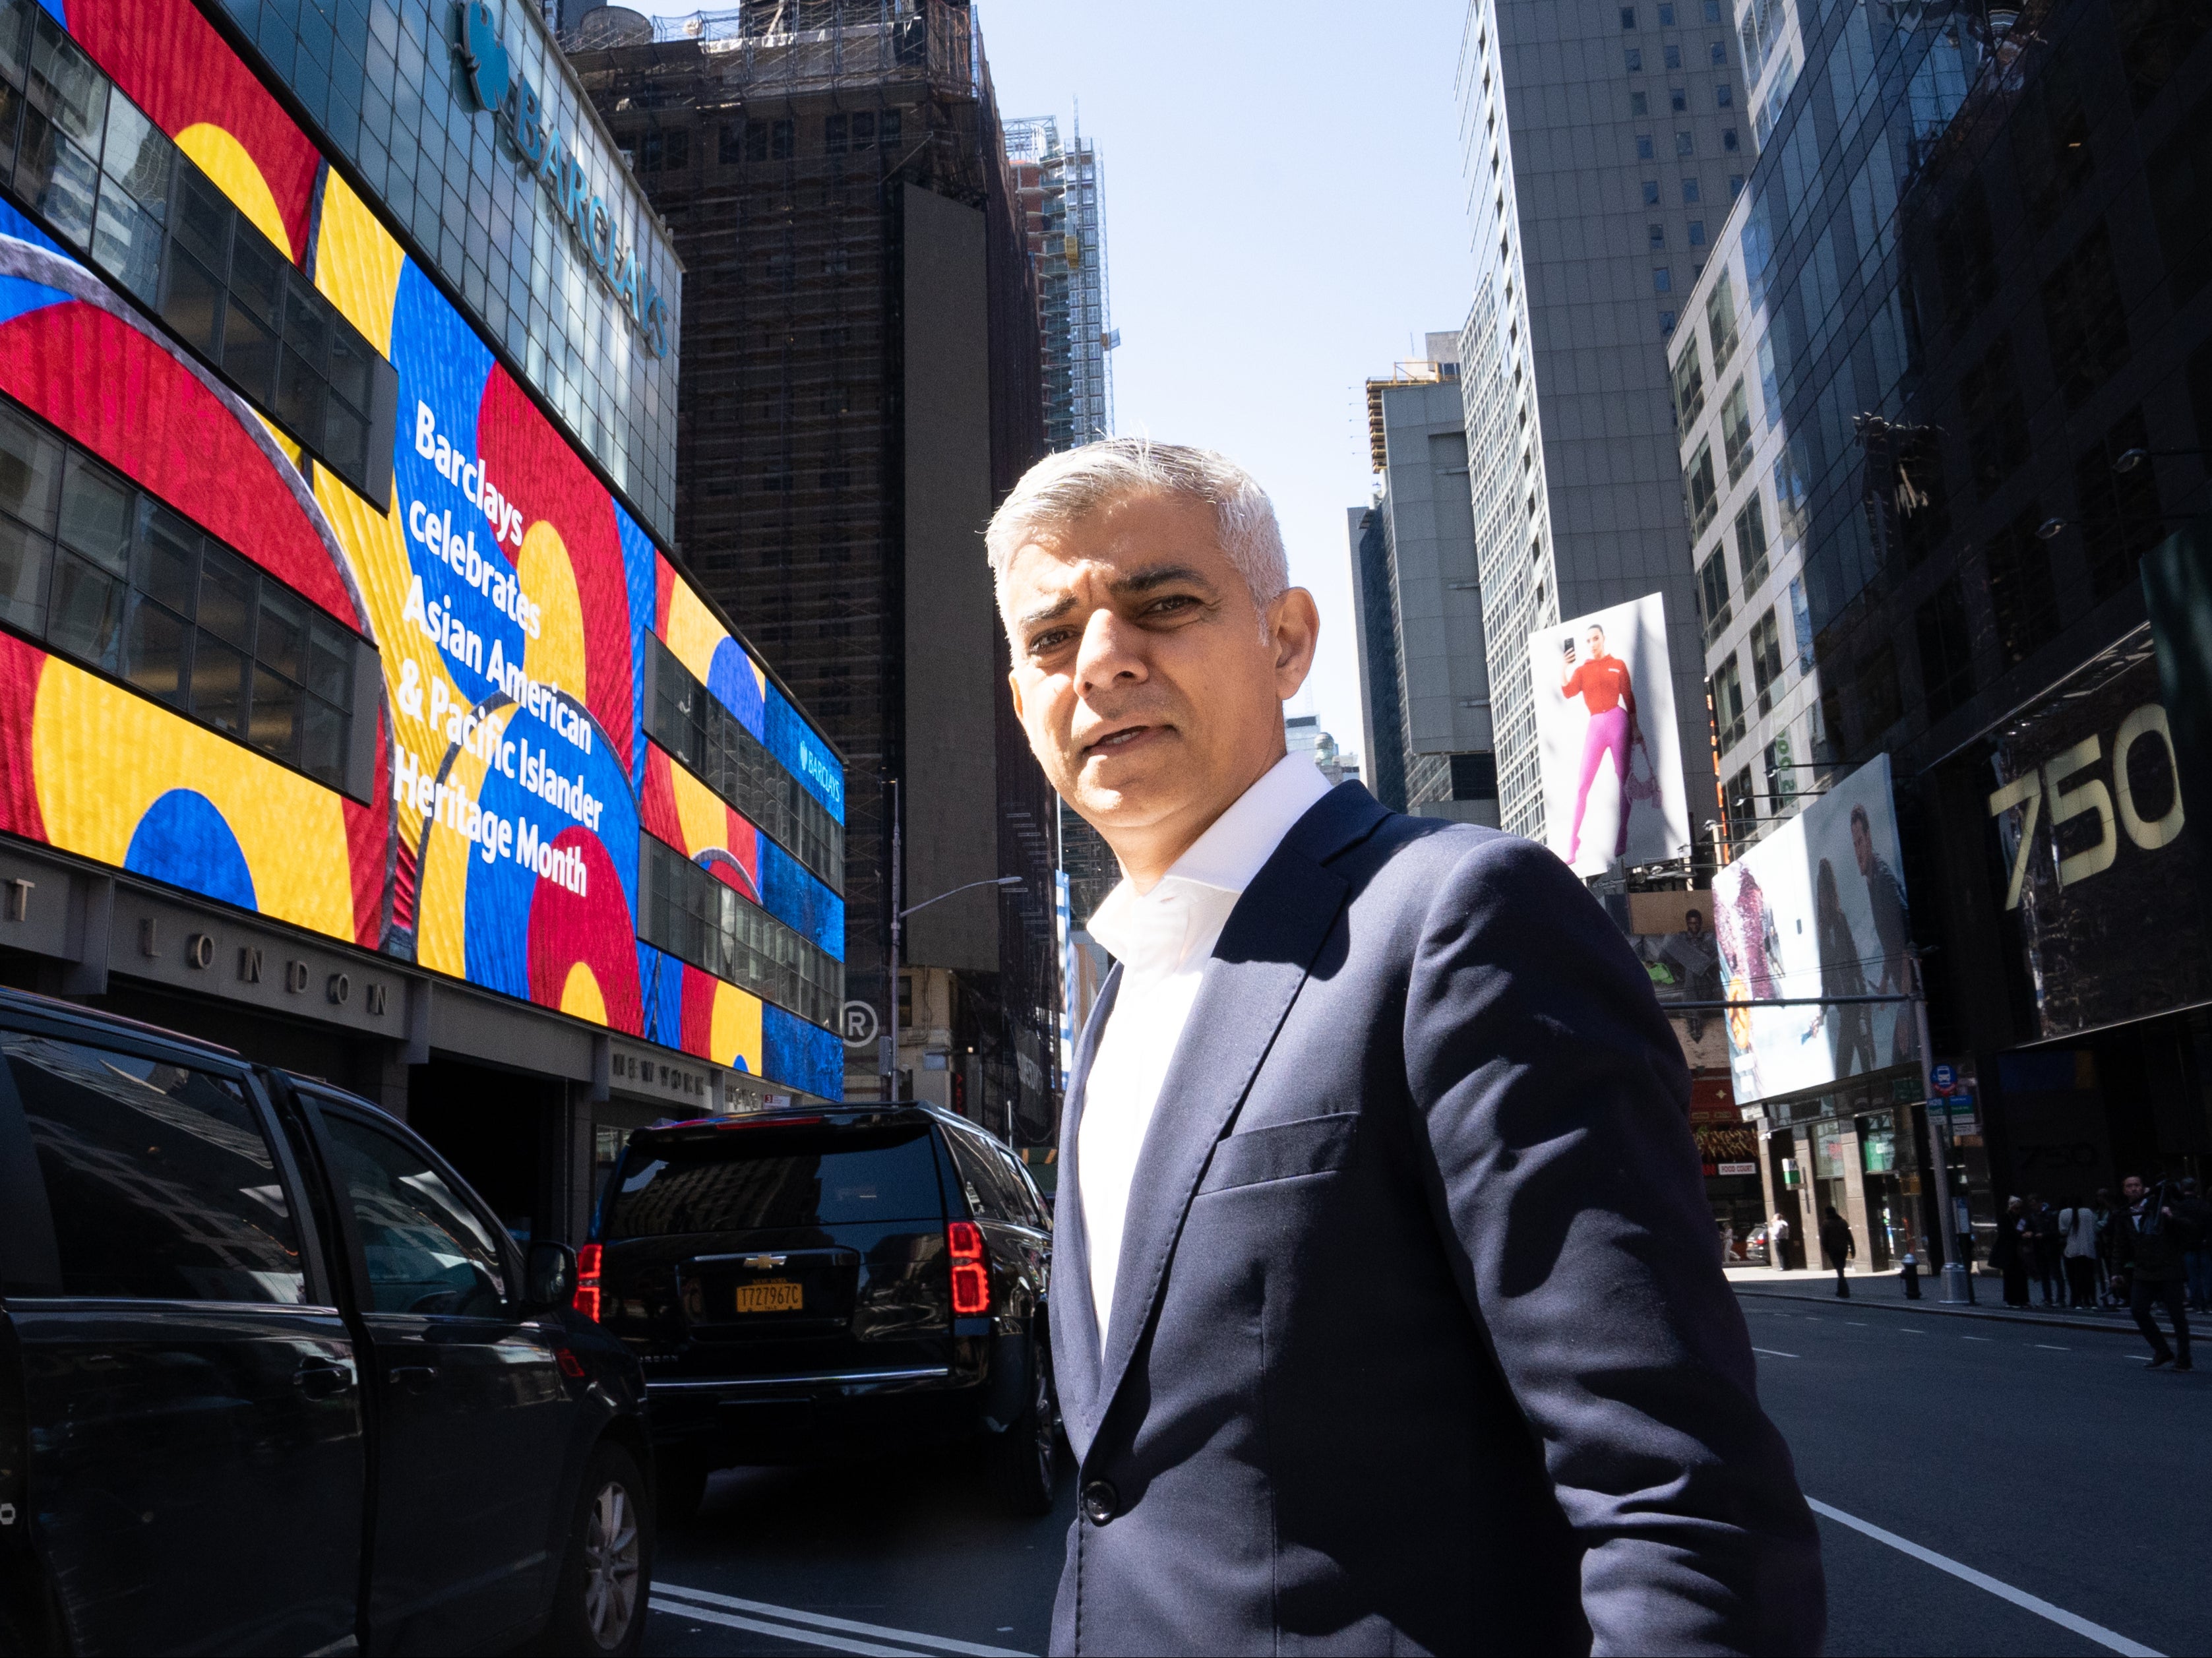 London Mayor Sadiq Khan in New York